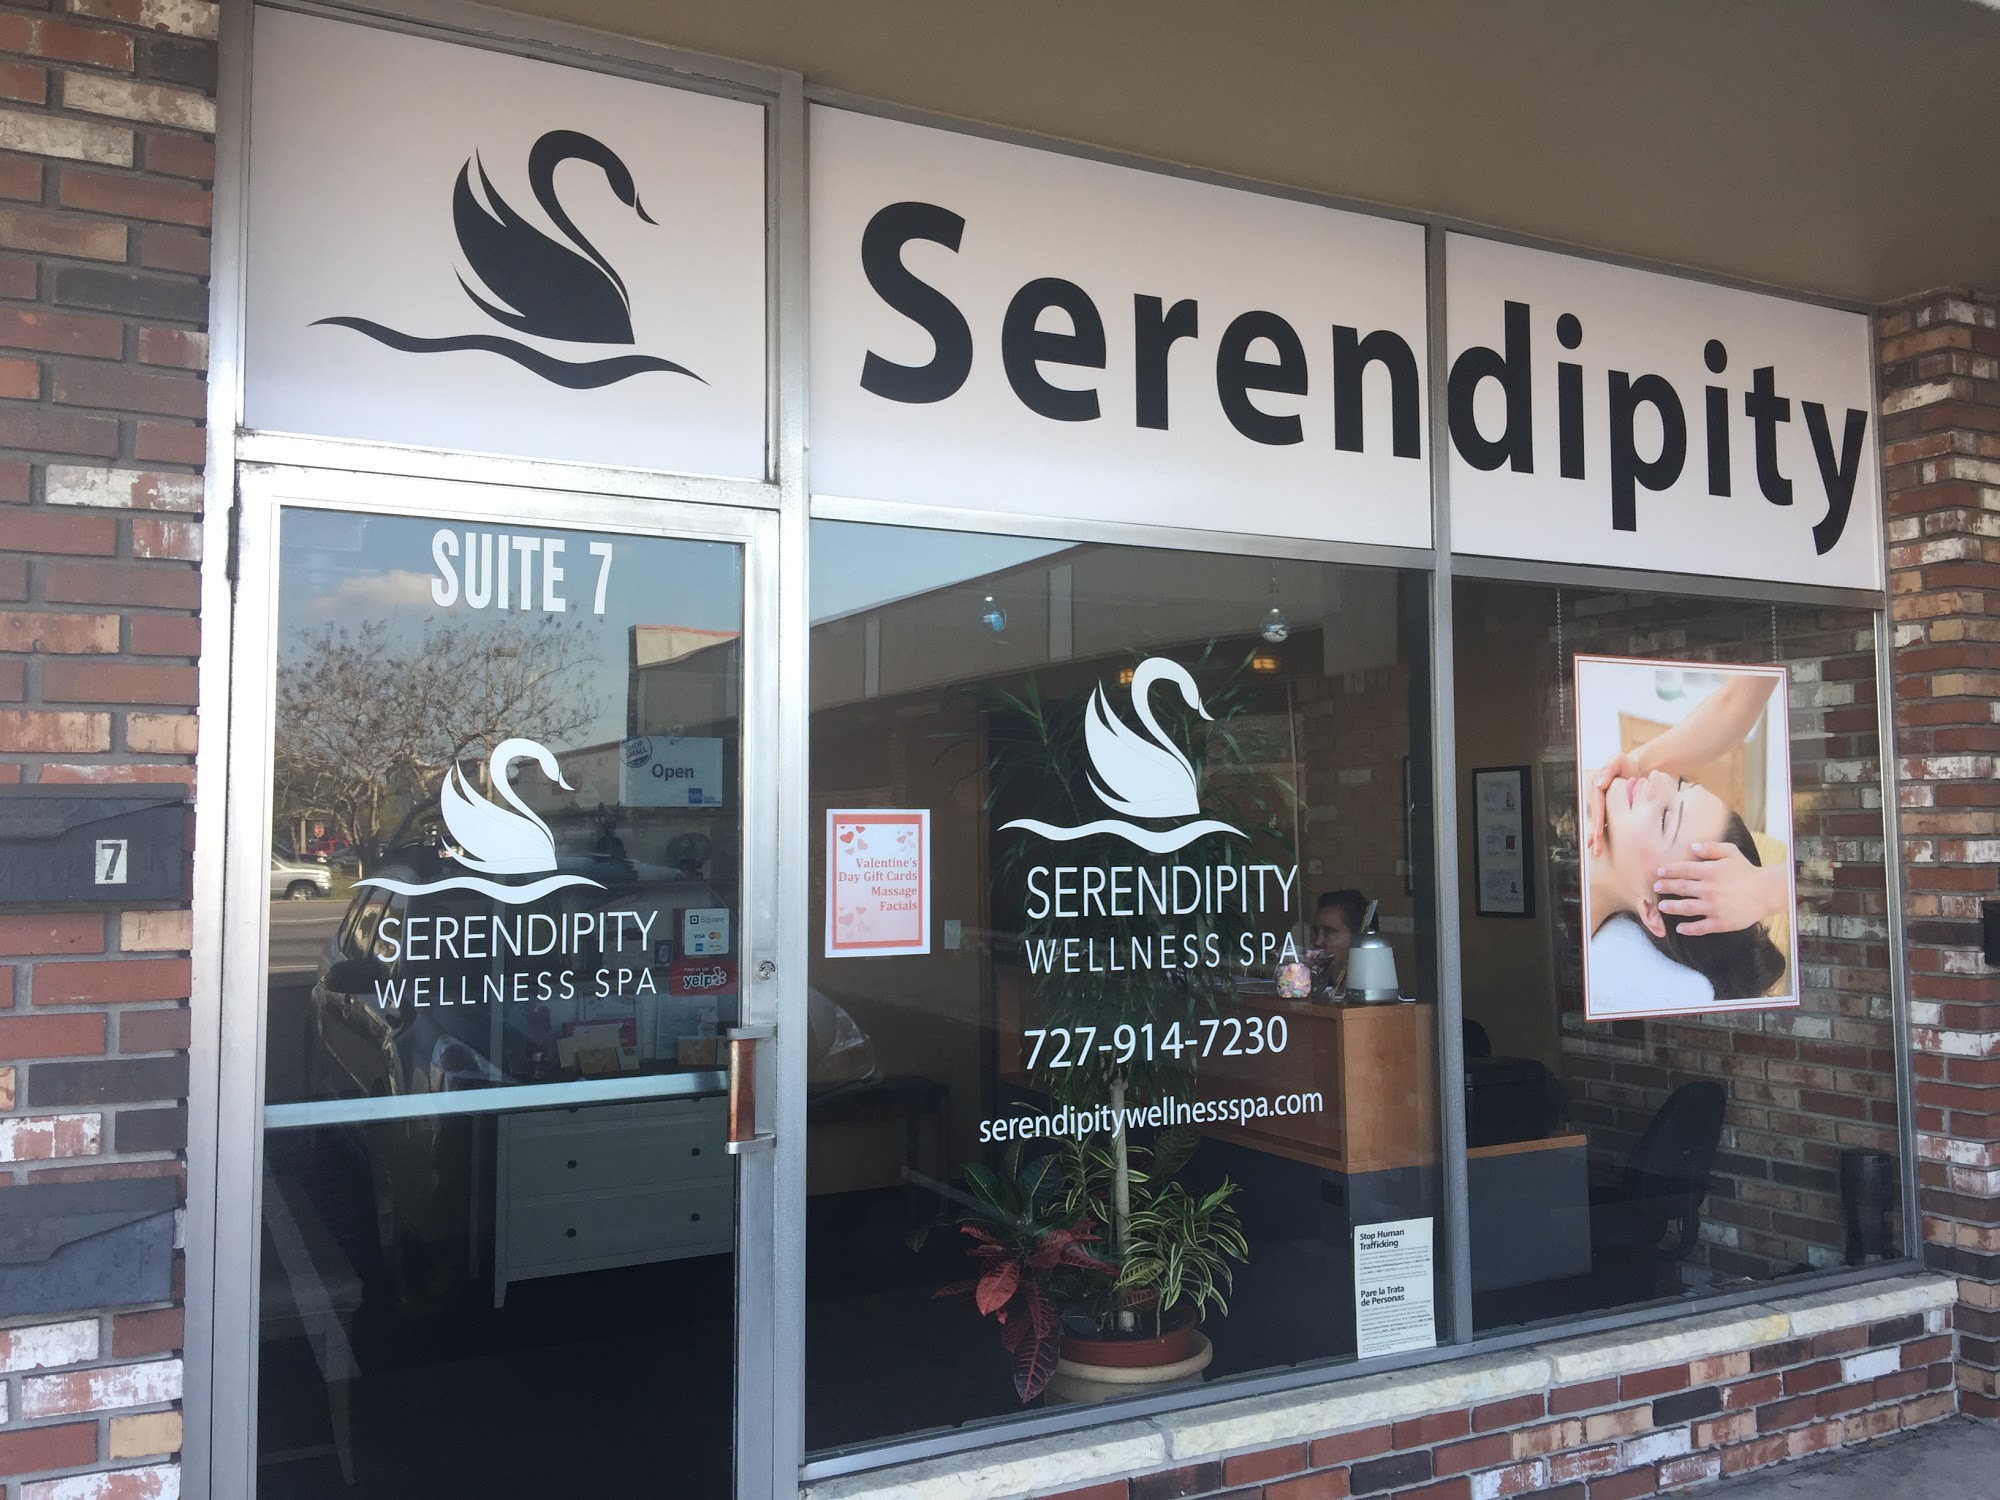 Serendipity Wellness Spa